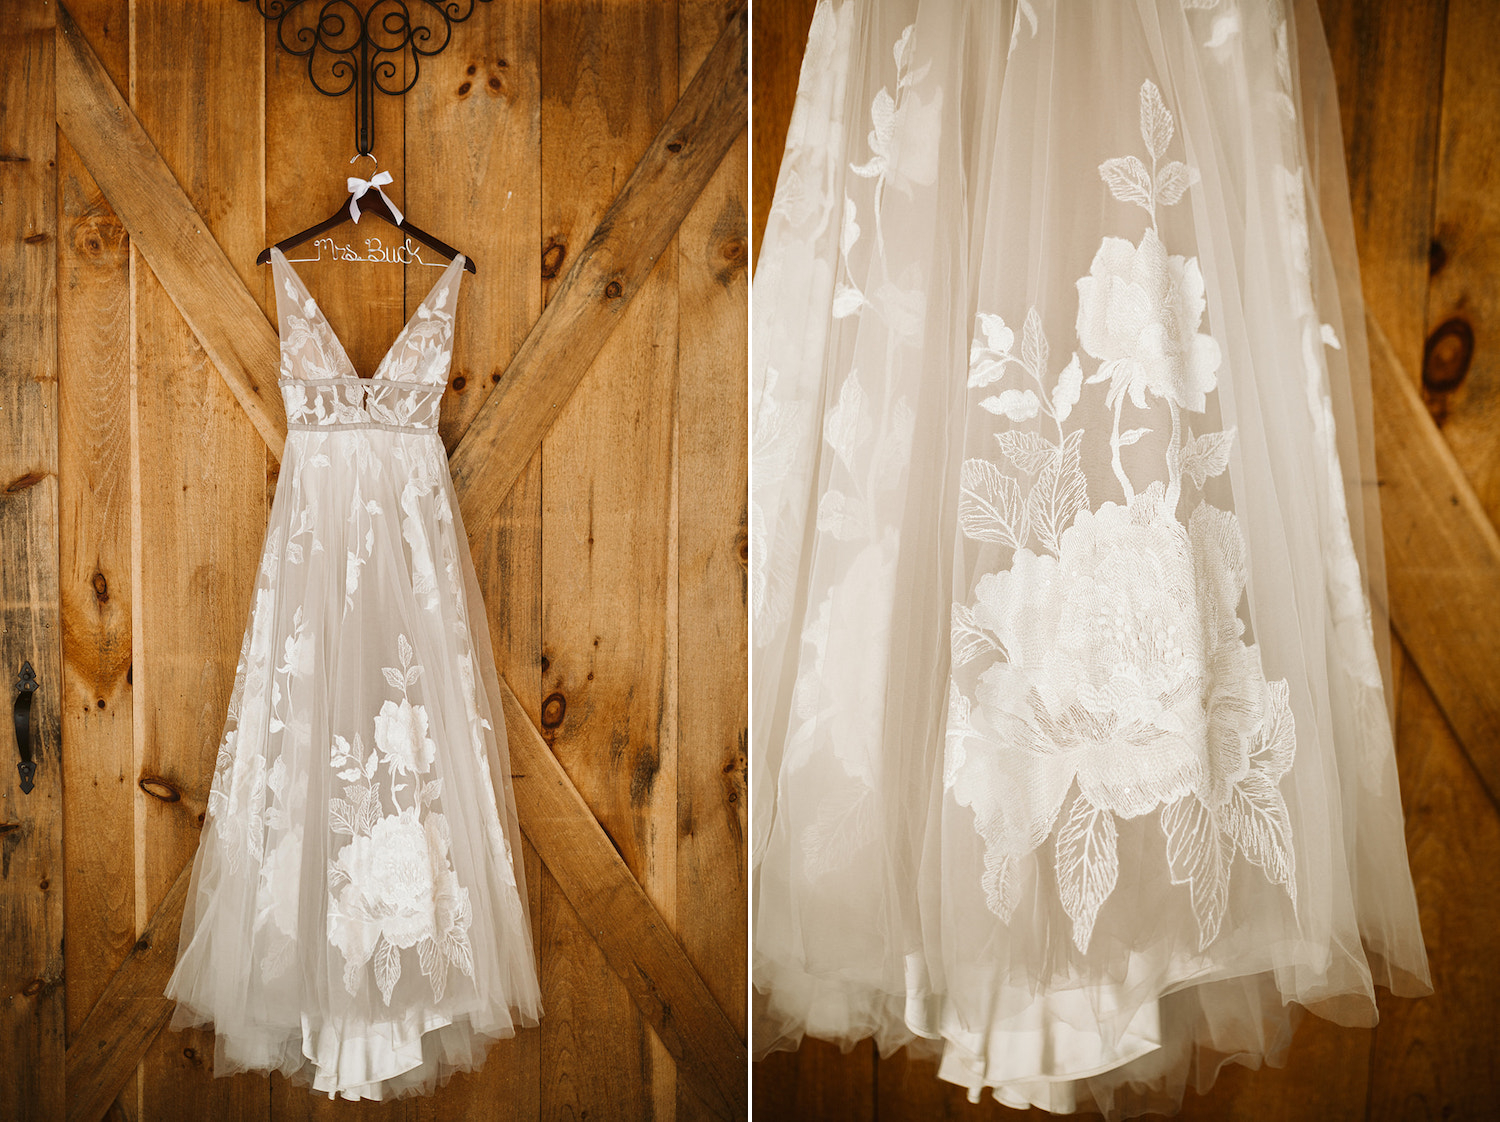 floral details on white tulle wedding dress hanging from custom hanger against wooden barn door